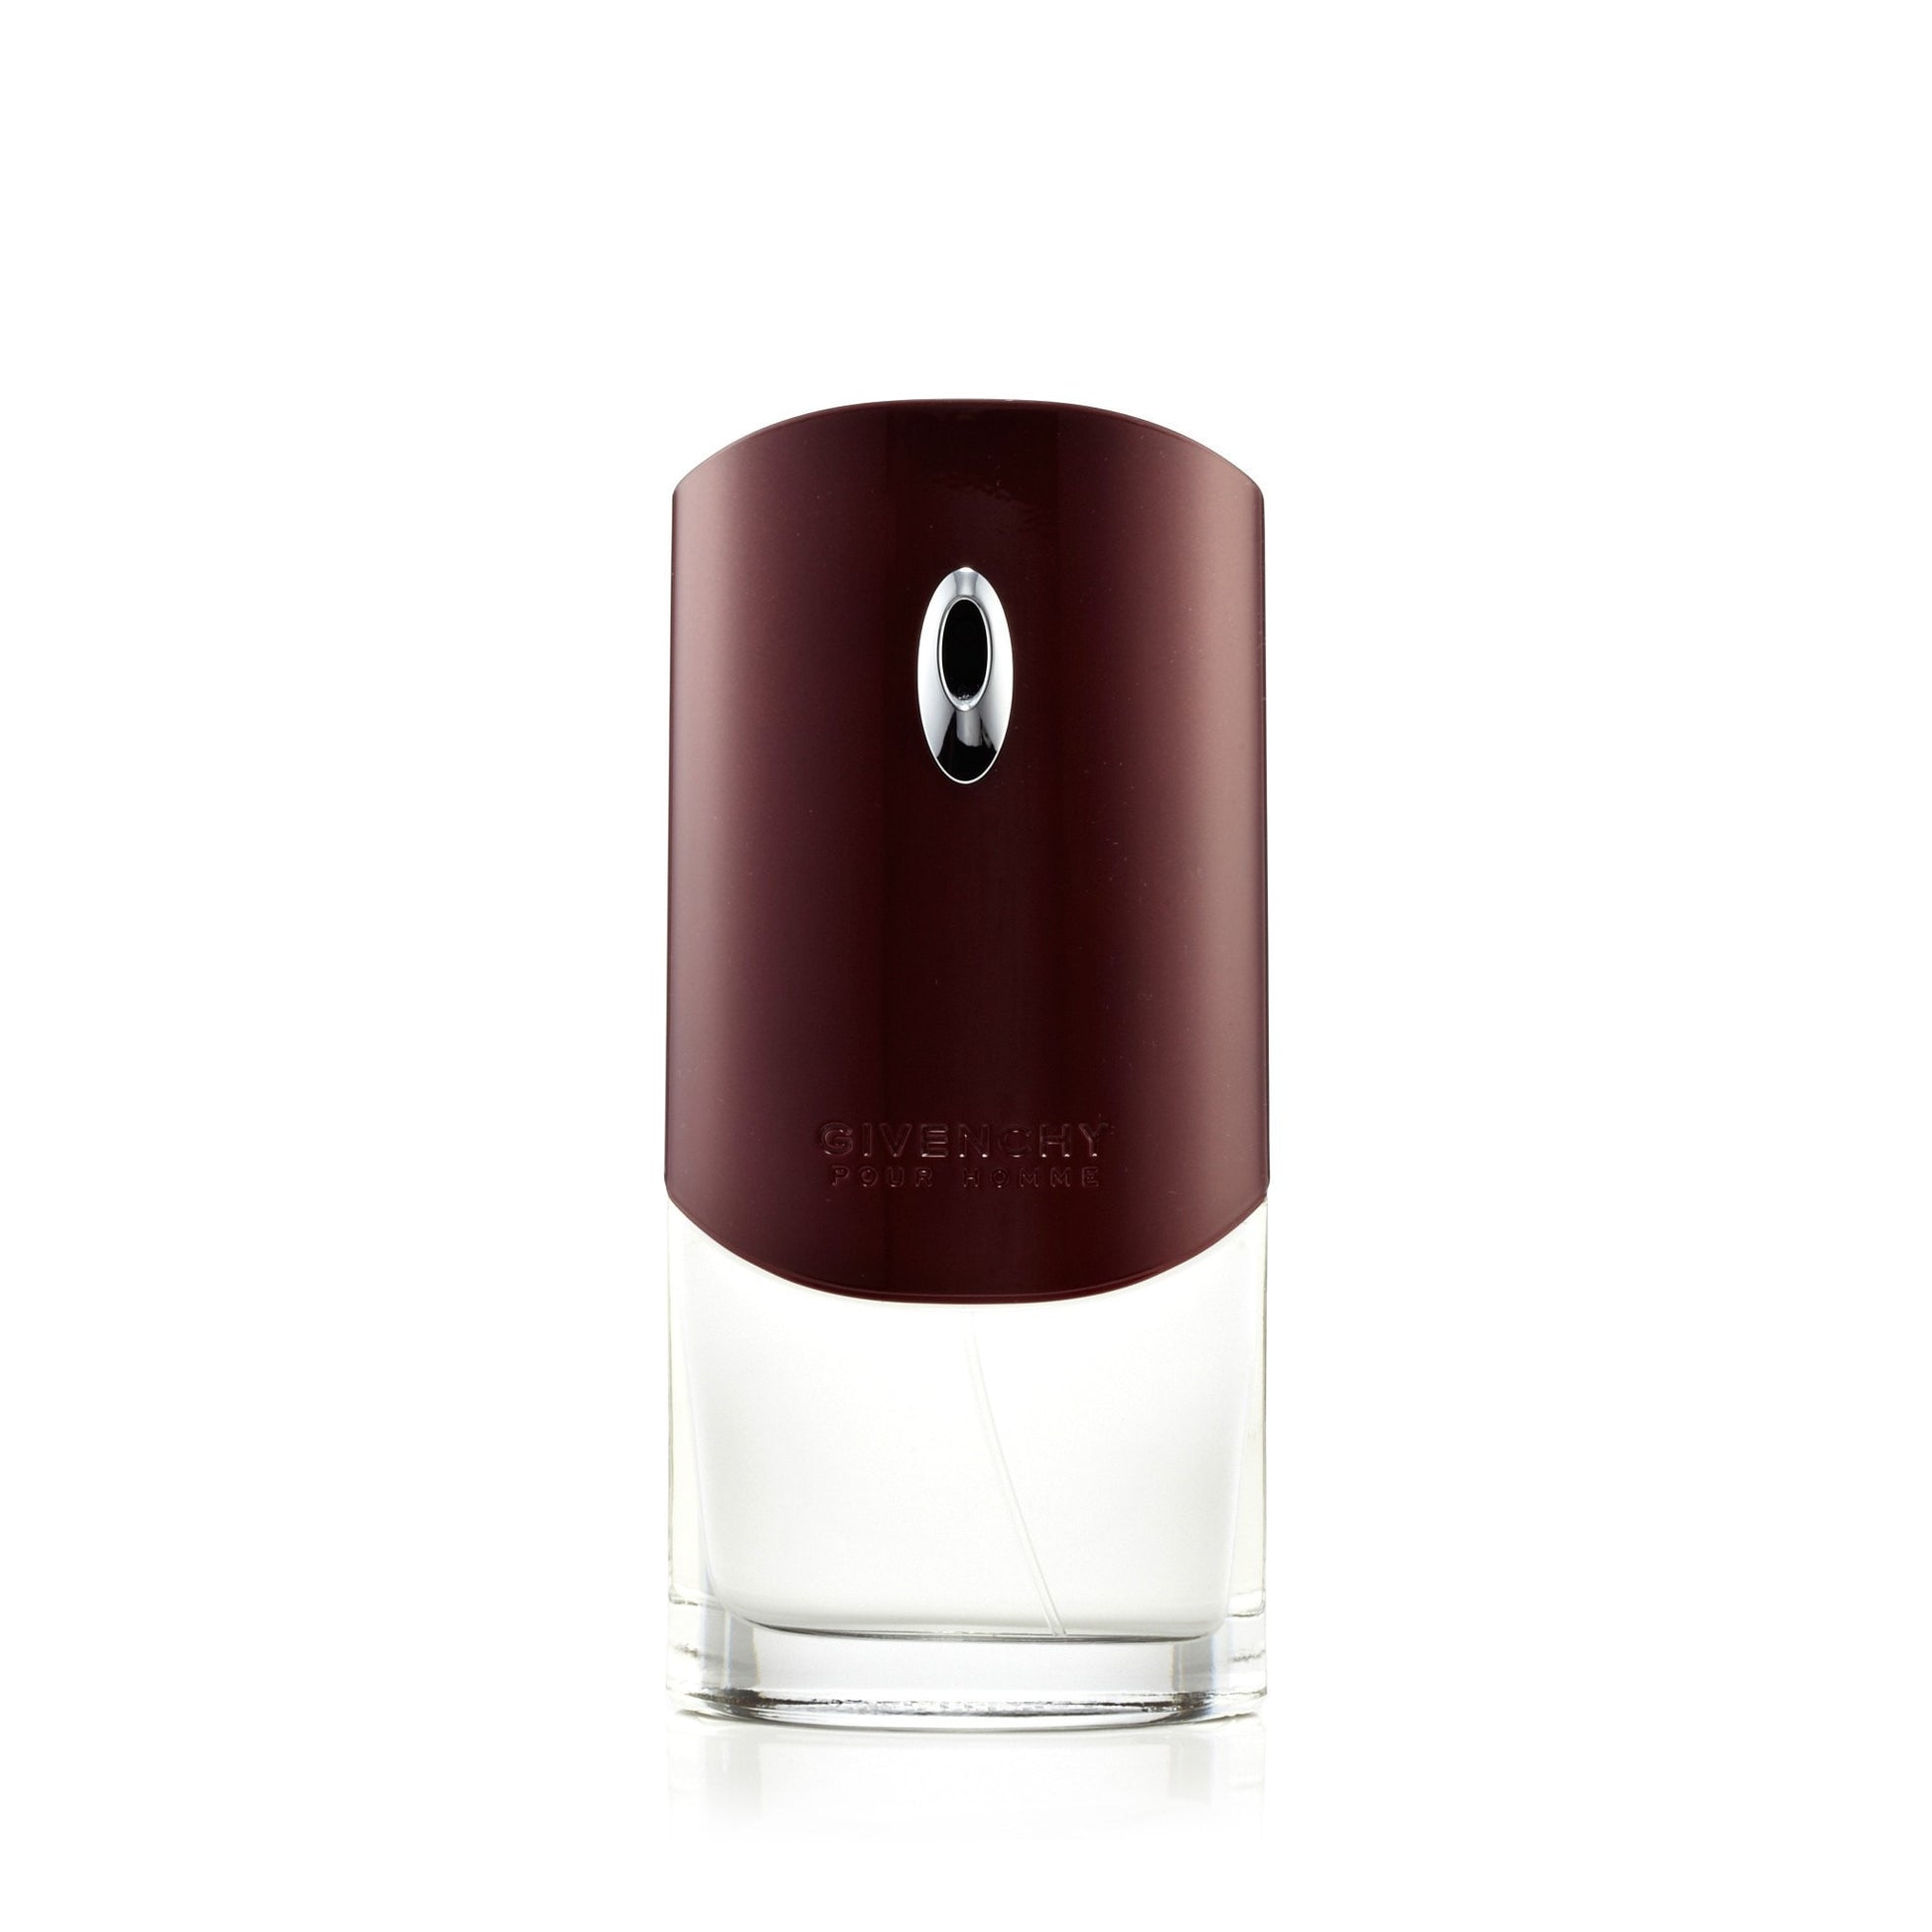 Pour Homme Eau de Toilette Spray for Men by Givenchy 3.4 oz. Click to open in modal